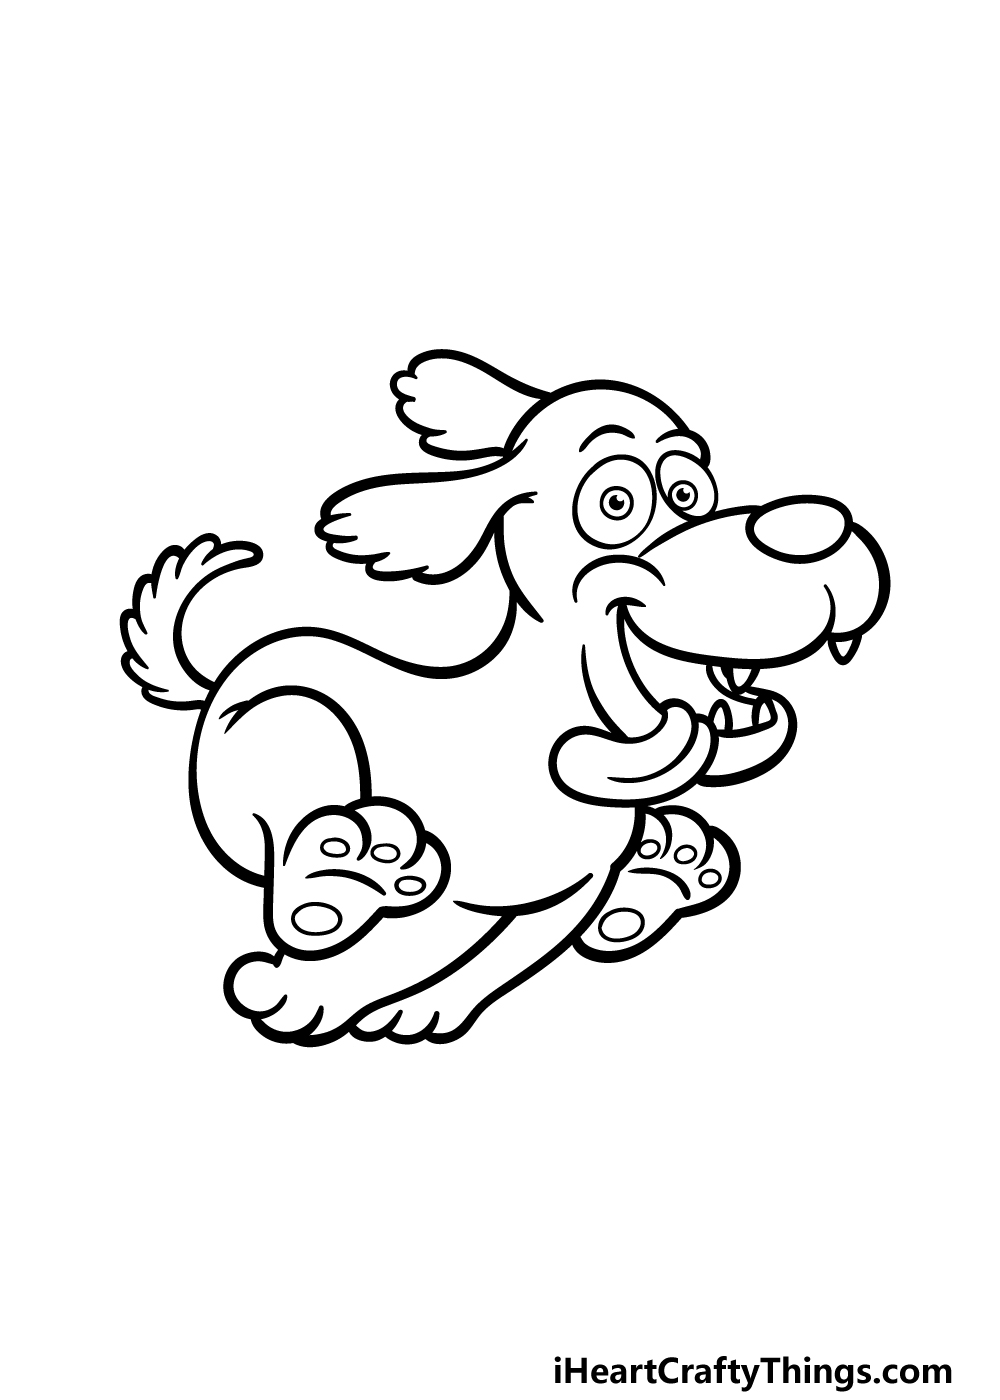 how to draw a cartoon dog step 4